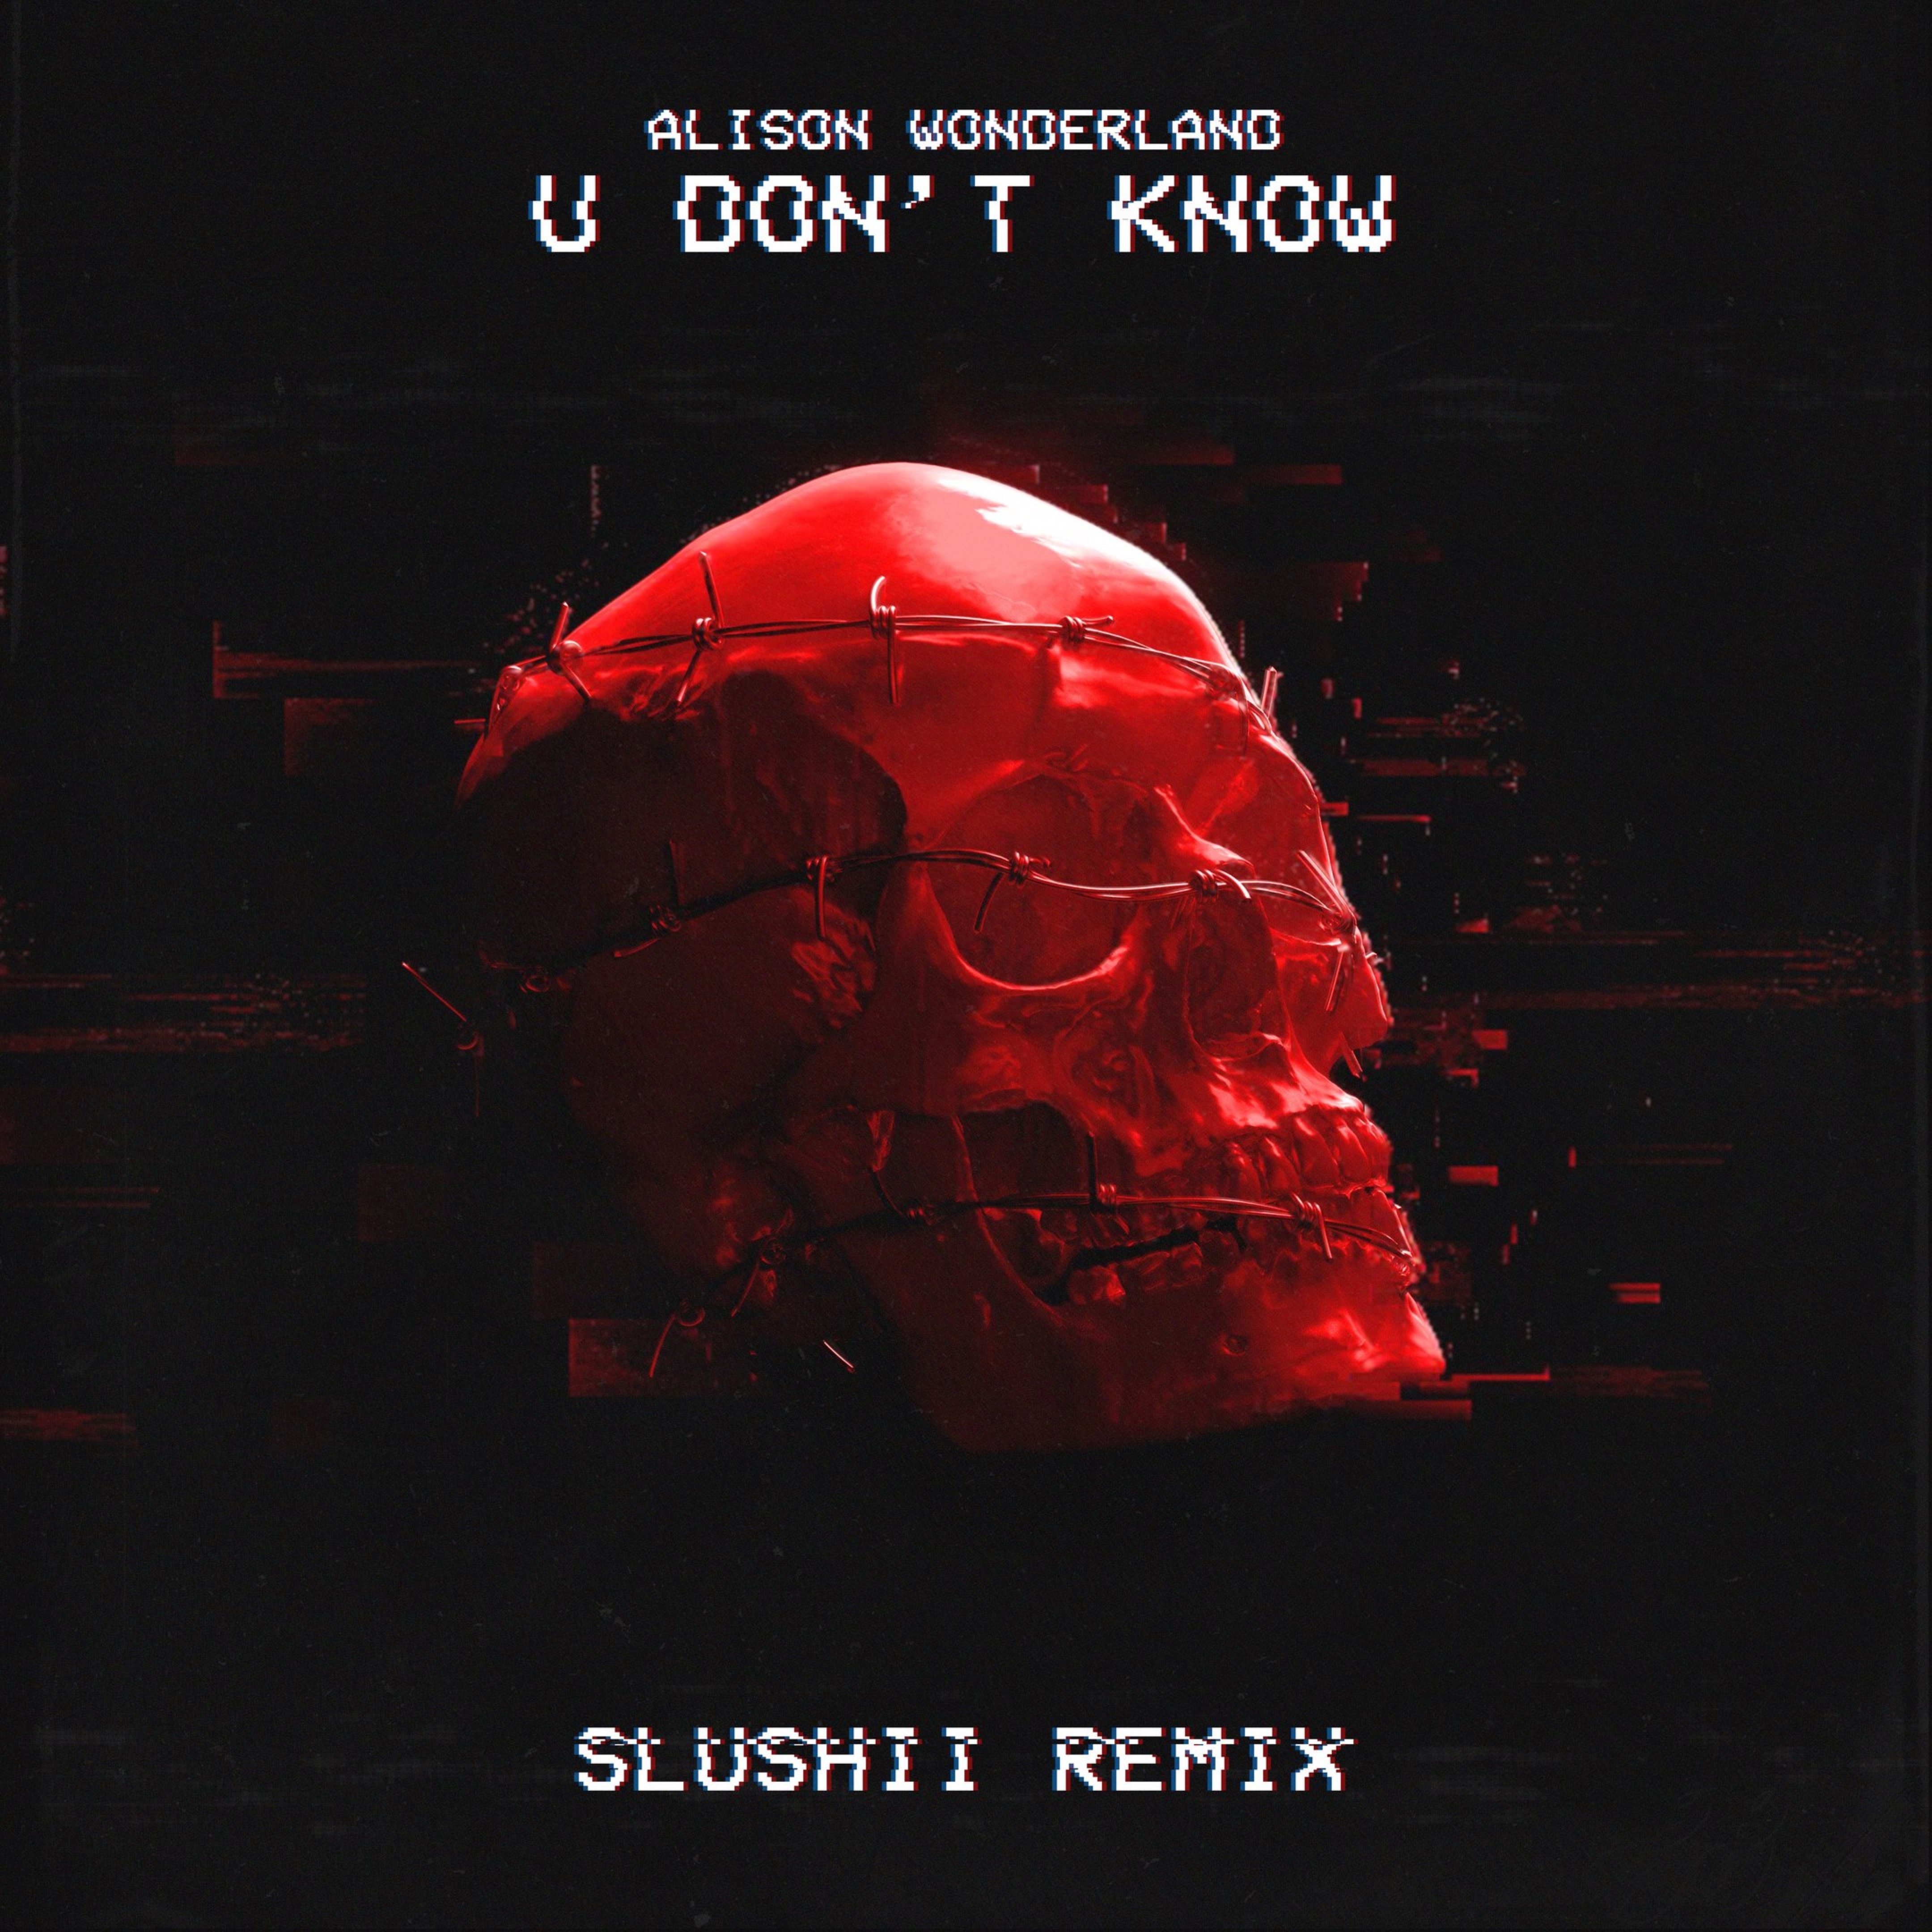 U Don't Know (Slushii Remix)